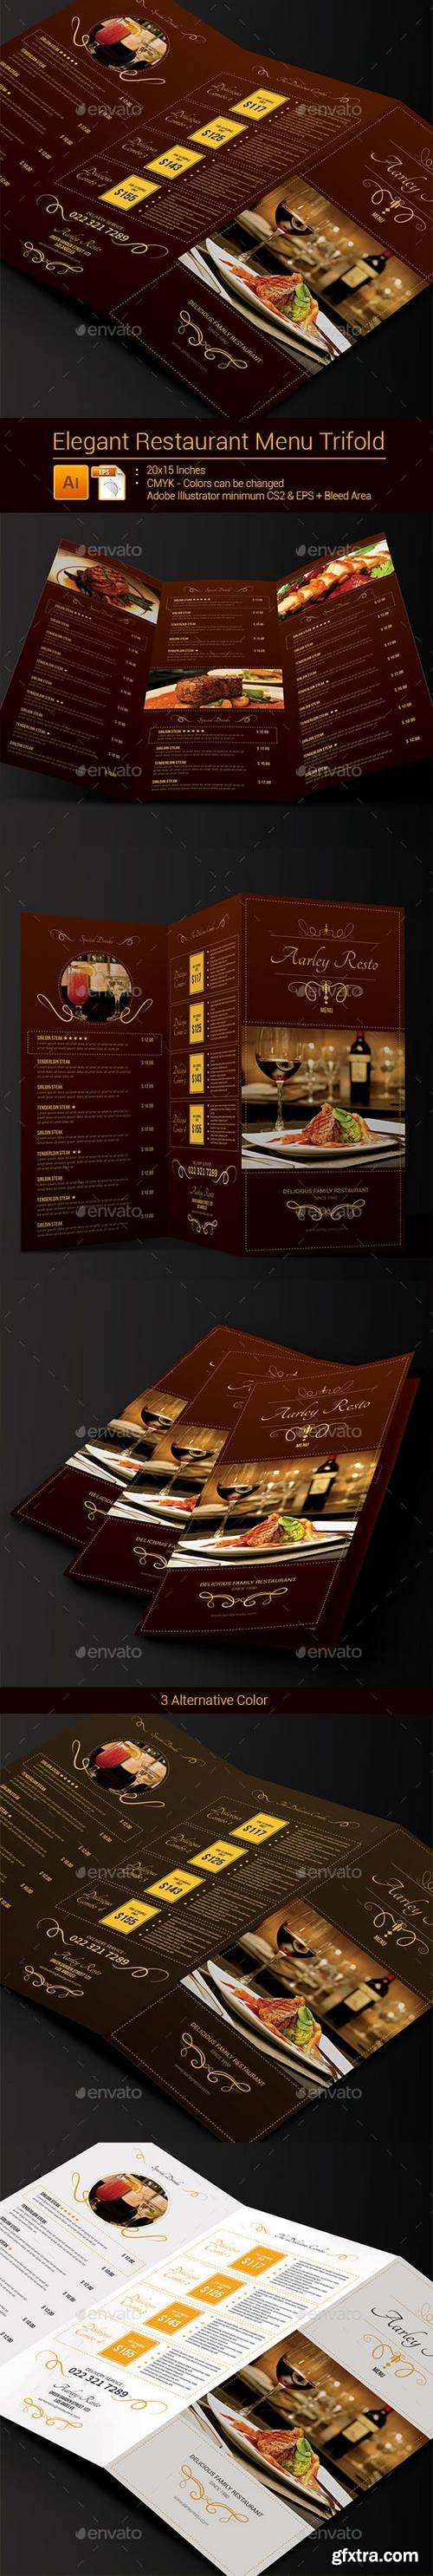 Graphicriver - Elegant Restaurant Menu Trifold 9137918